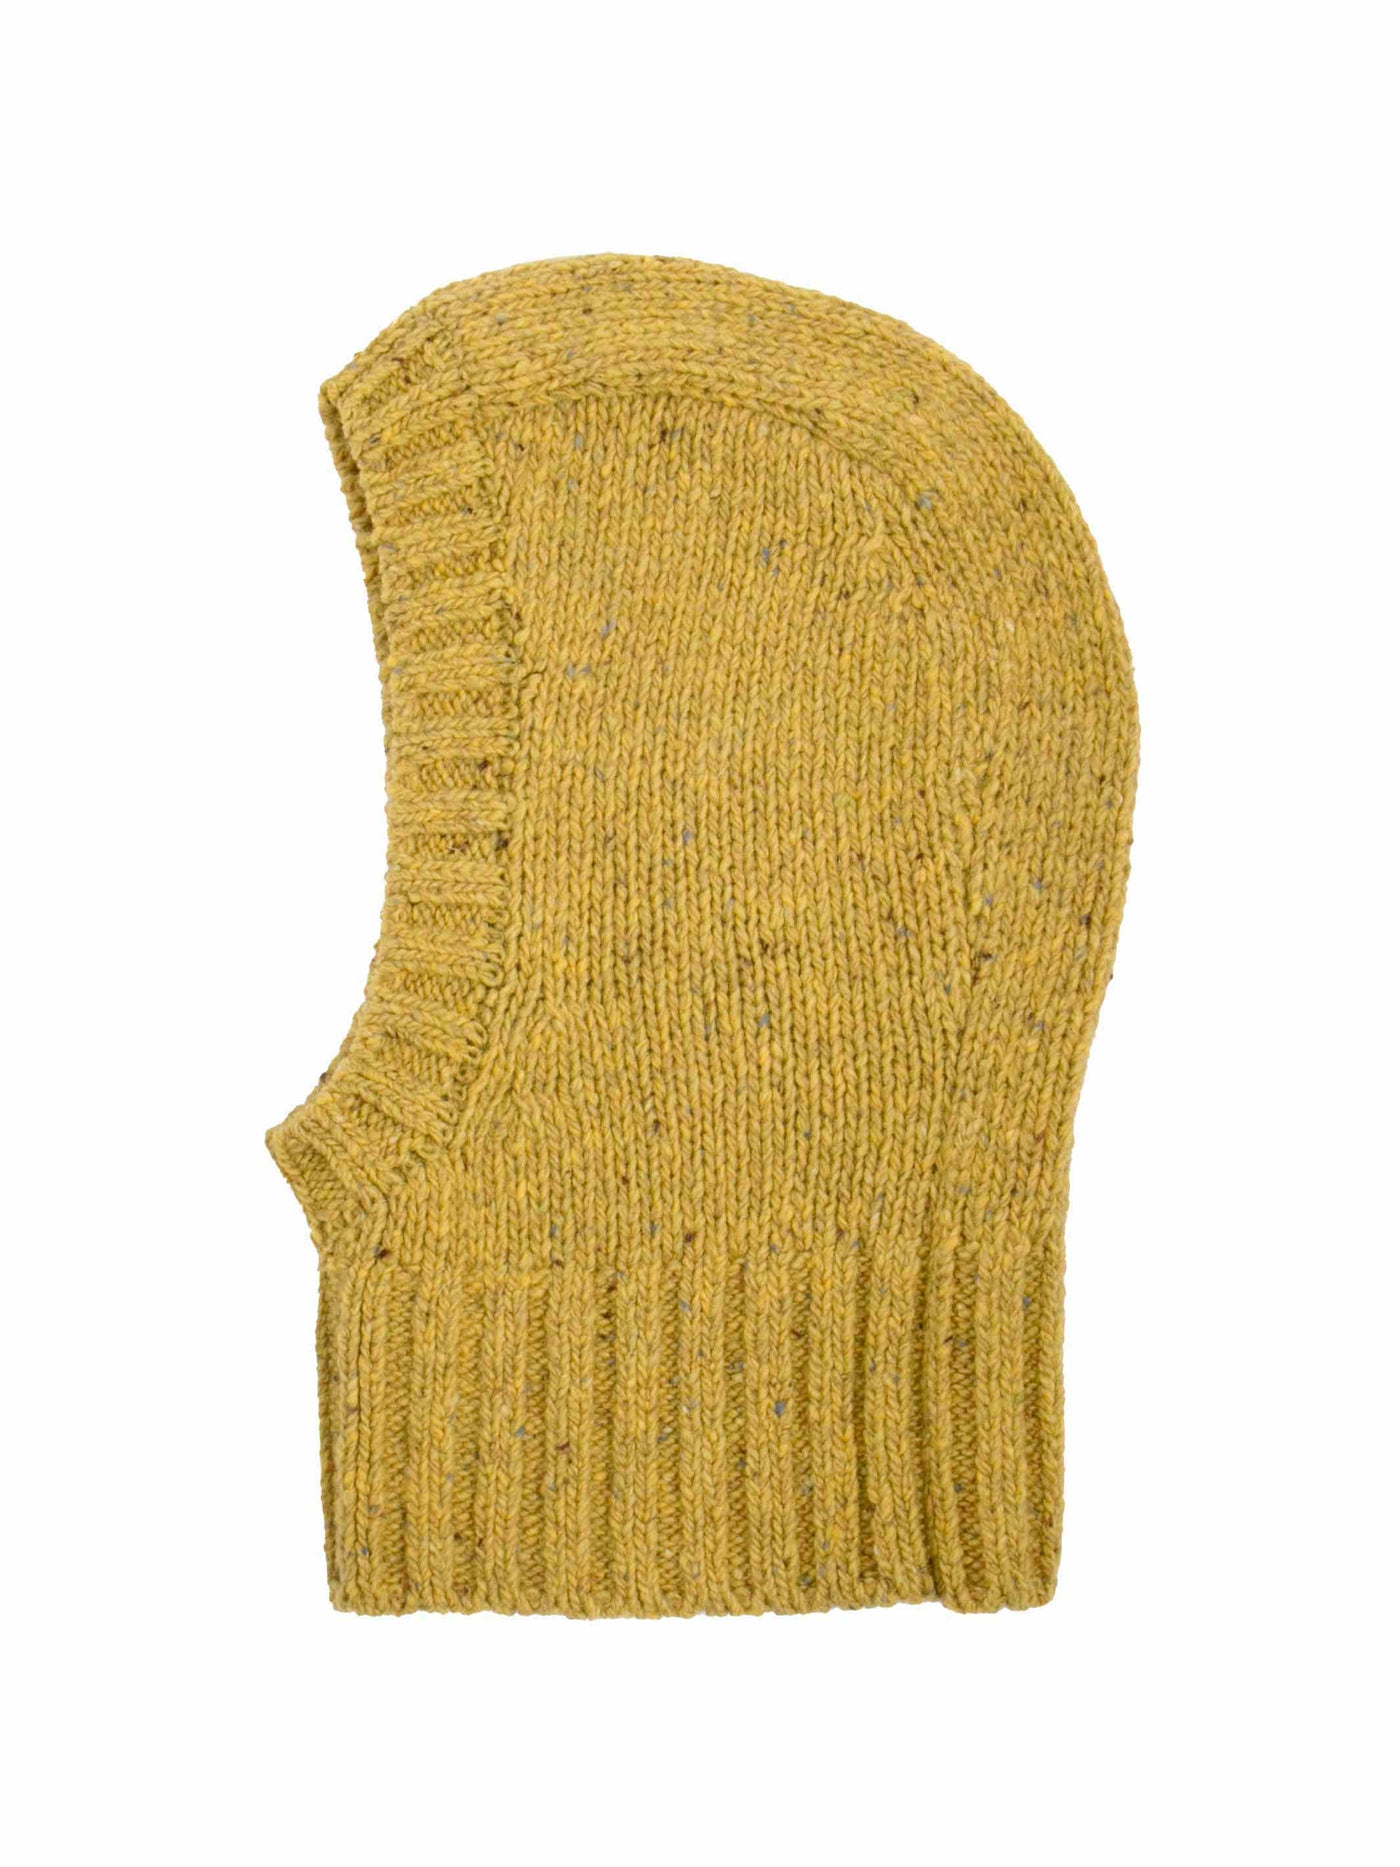 Nep yarn knit balaclava